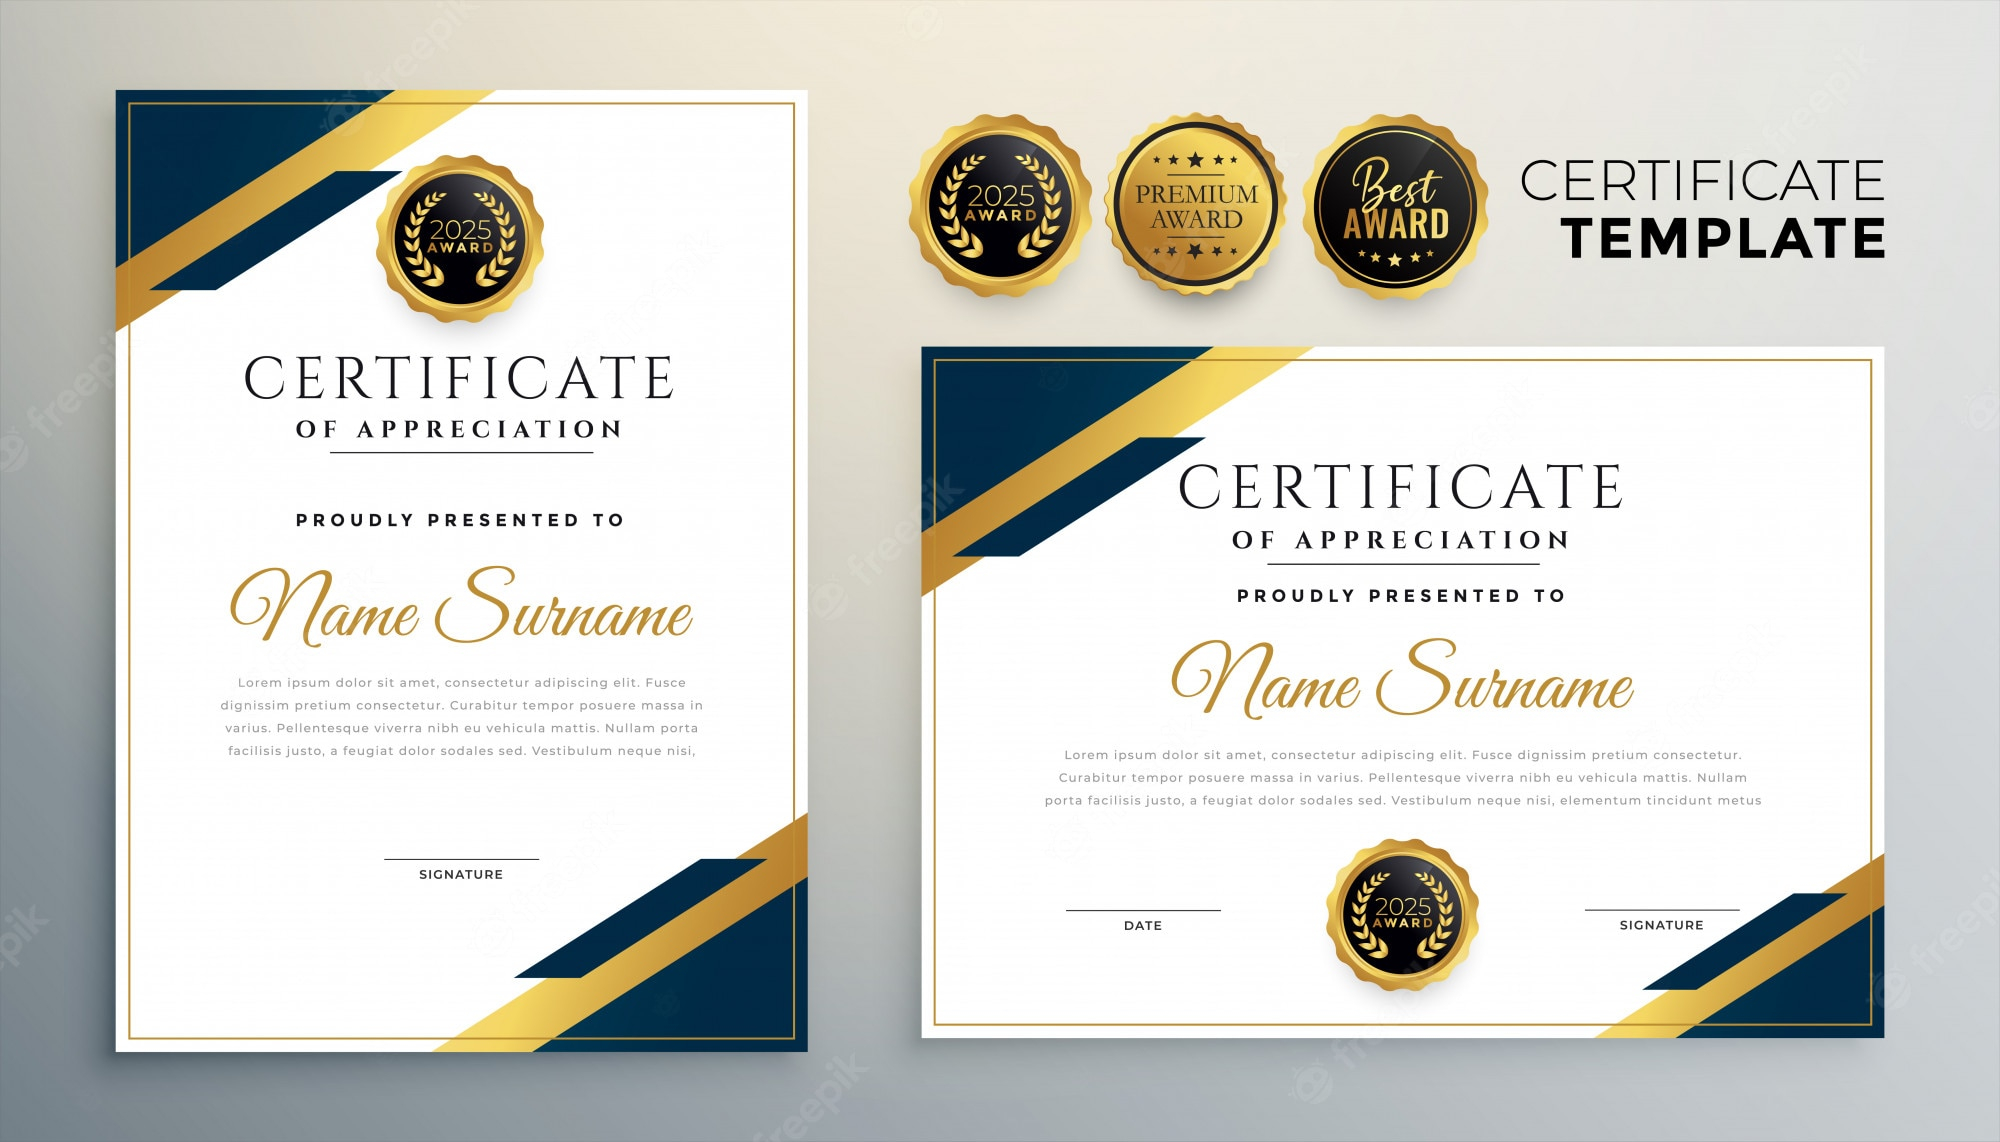 Certificate of achievement Images  Free Vectors, Stock Photos & PSD